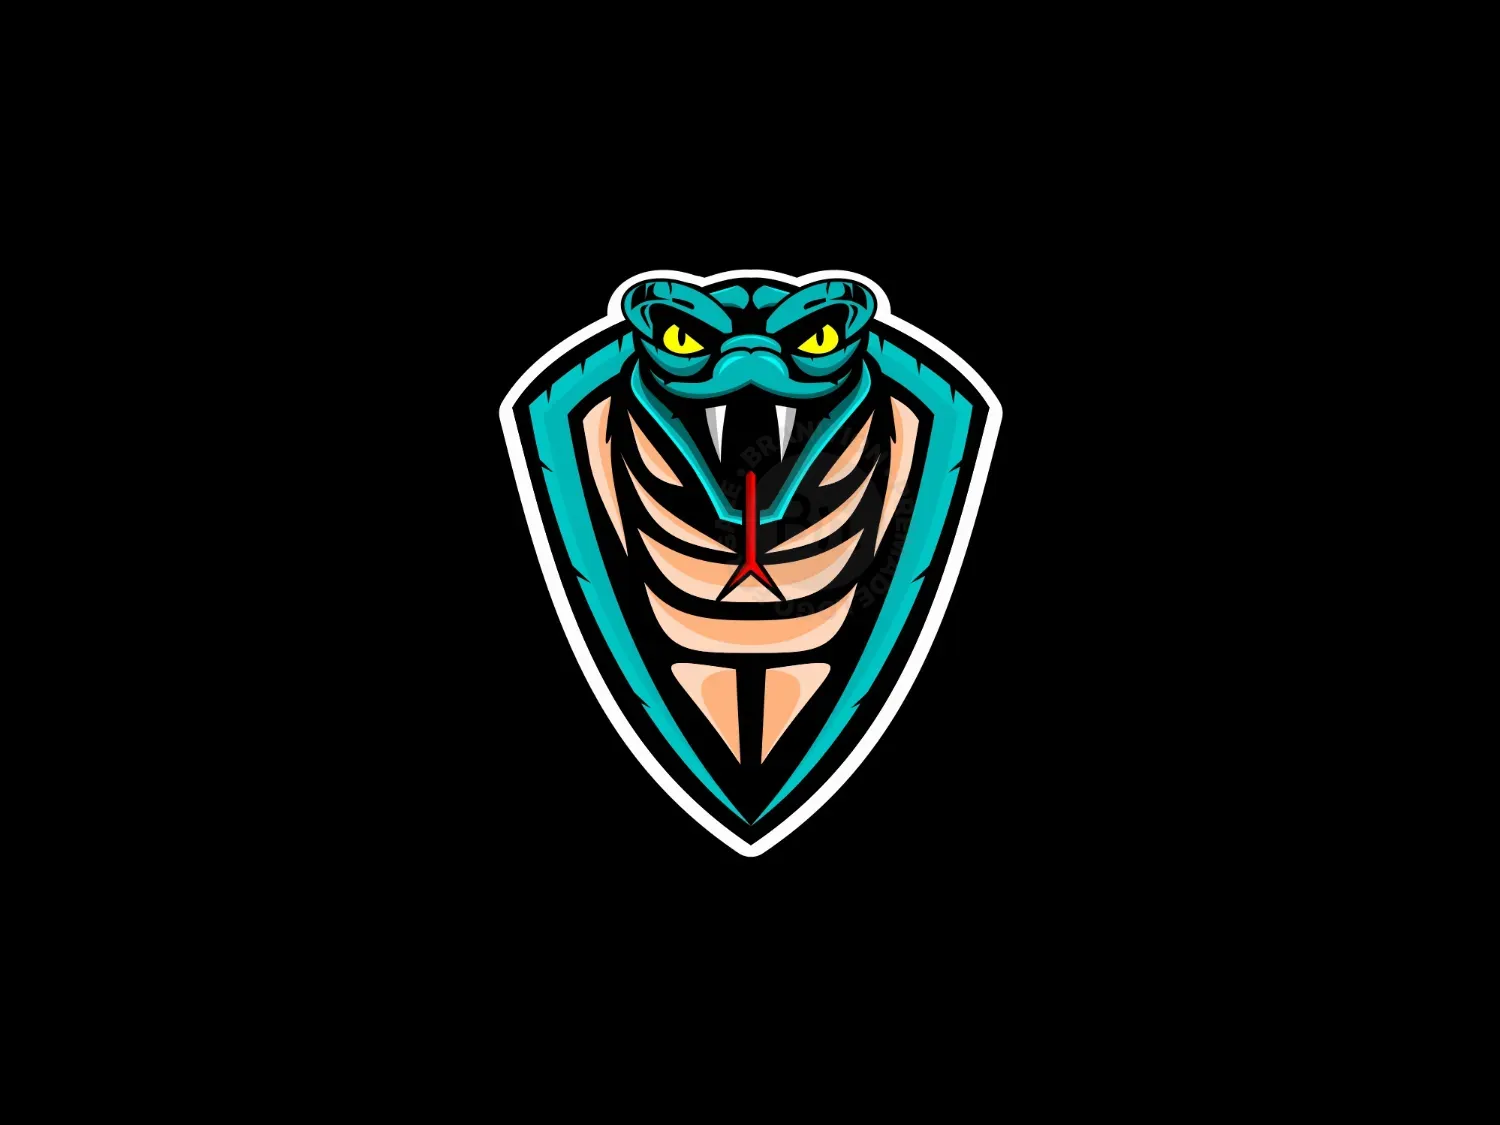 King cobra head mascot logo design Royalty Free Vector Image